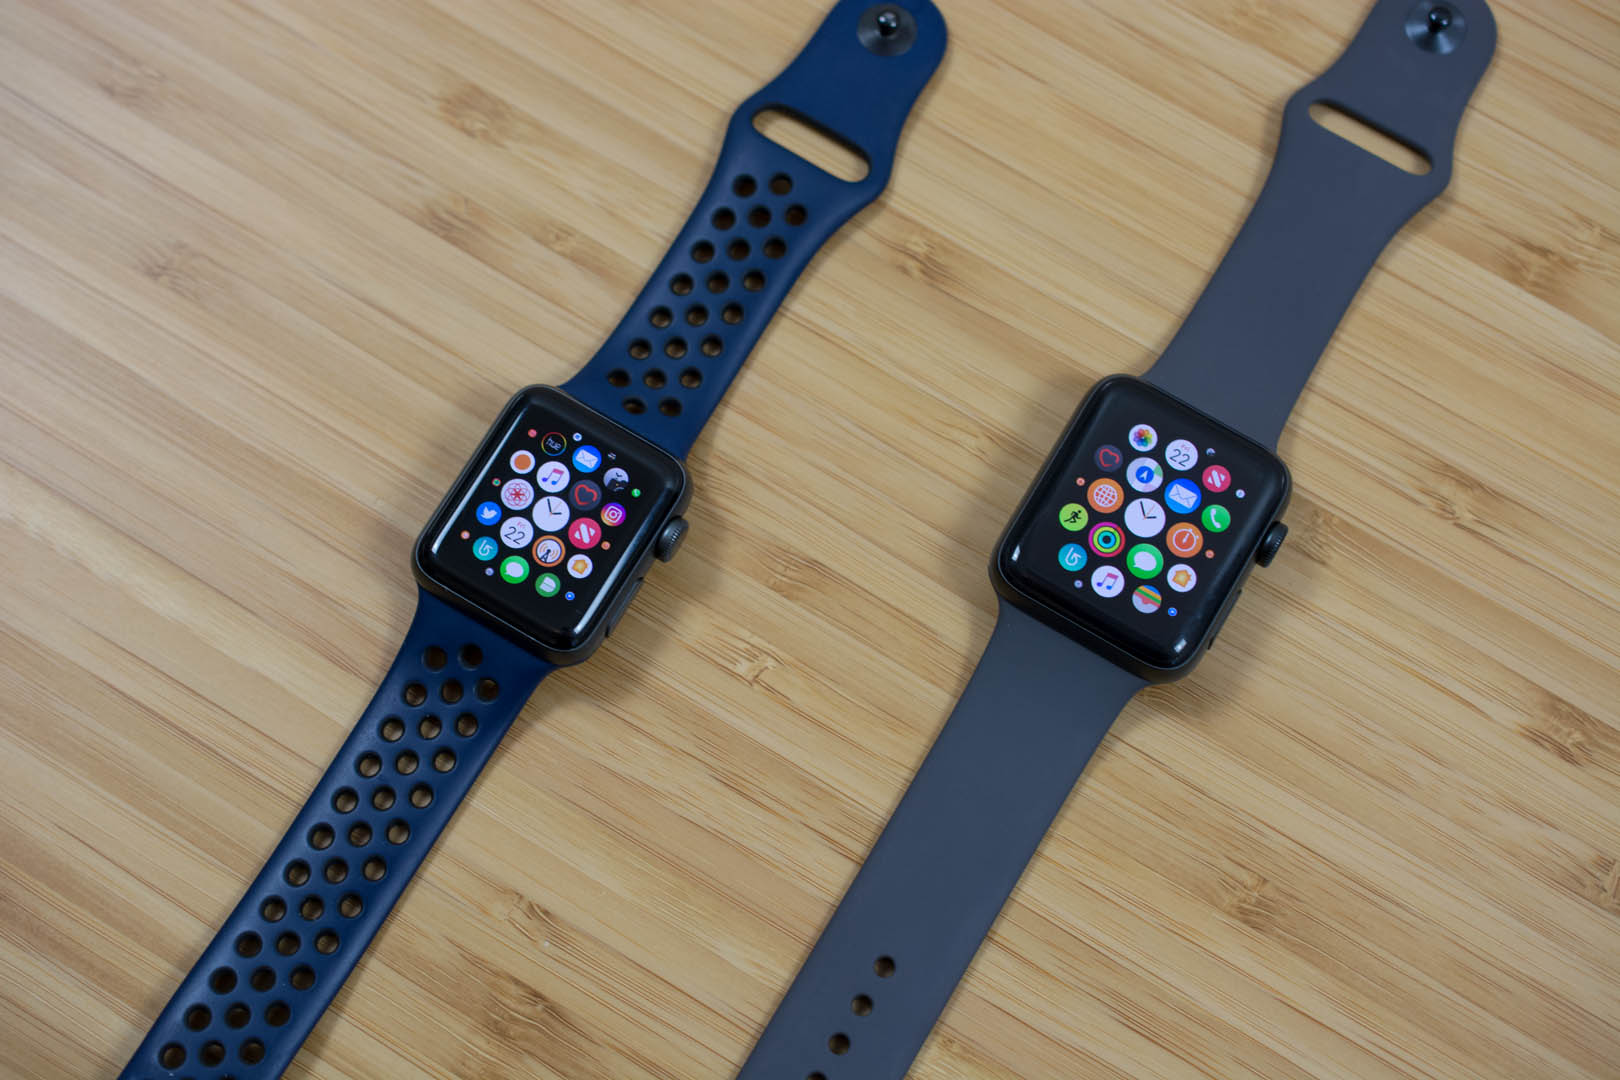 Apple Watch Series 3 Review - PhoneArena